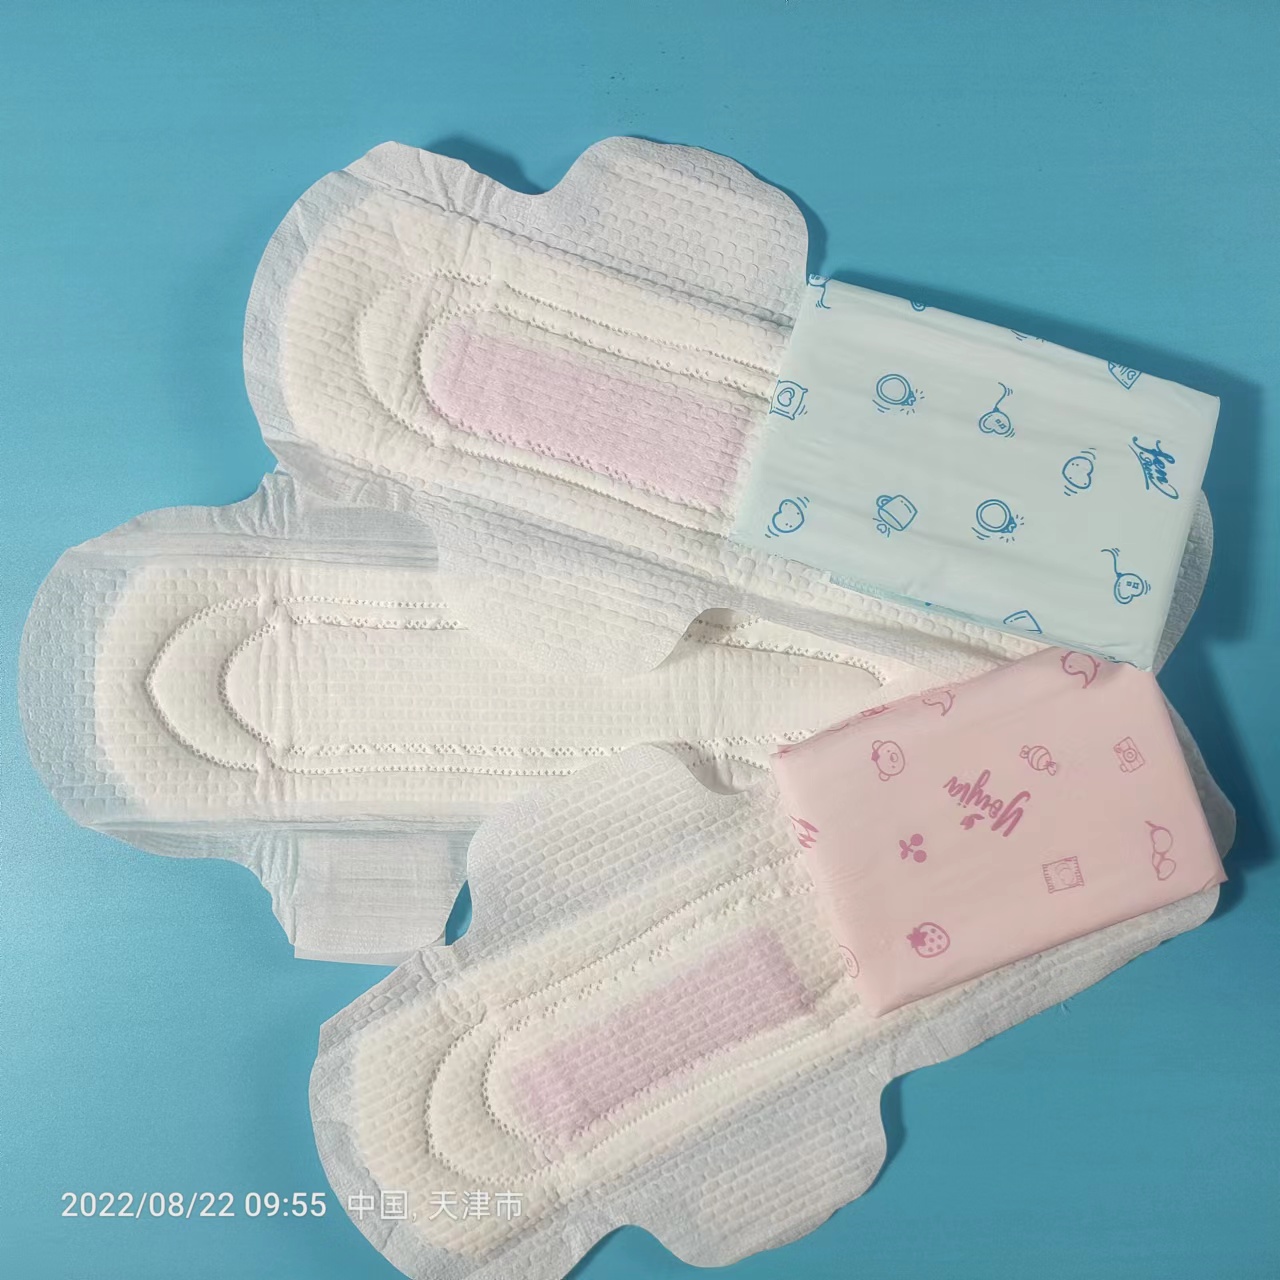 NEW sanitary napkin,sanitary pad,sanitary towels for coming month@2022